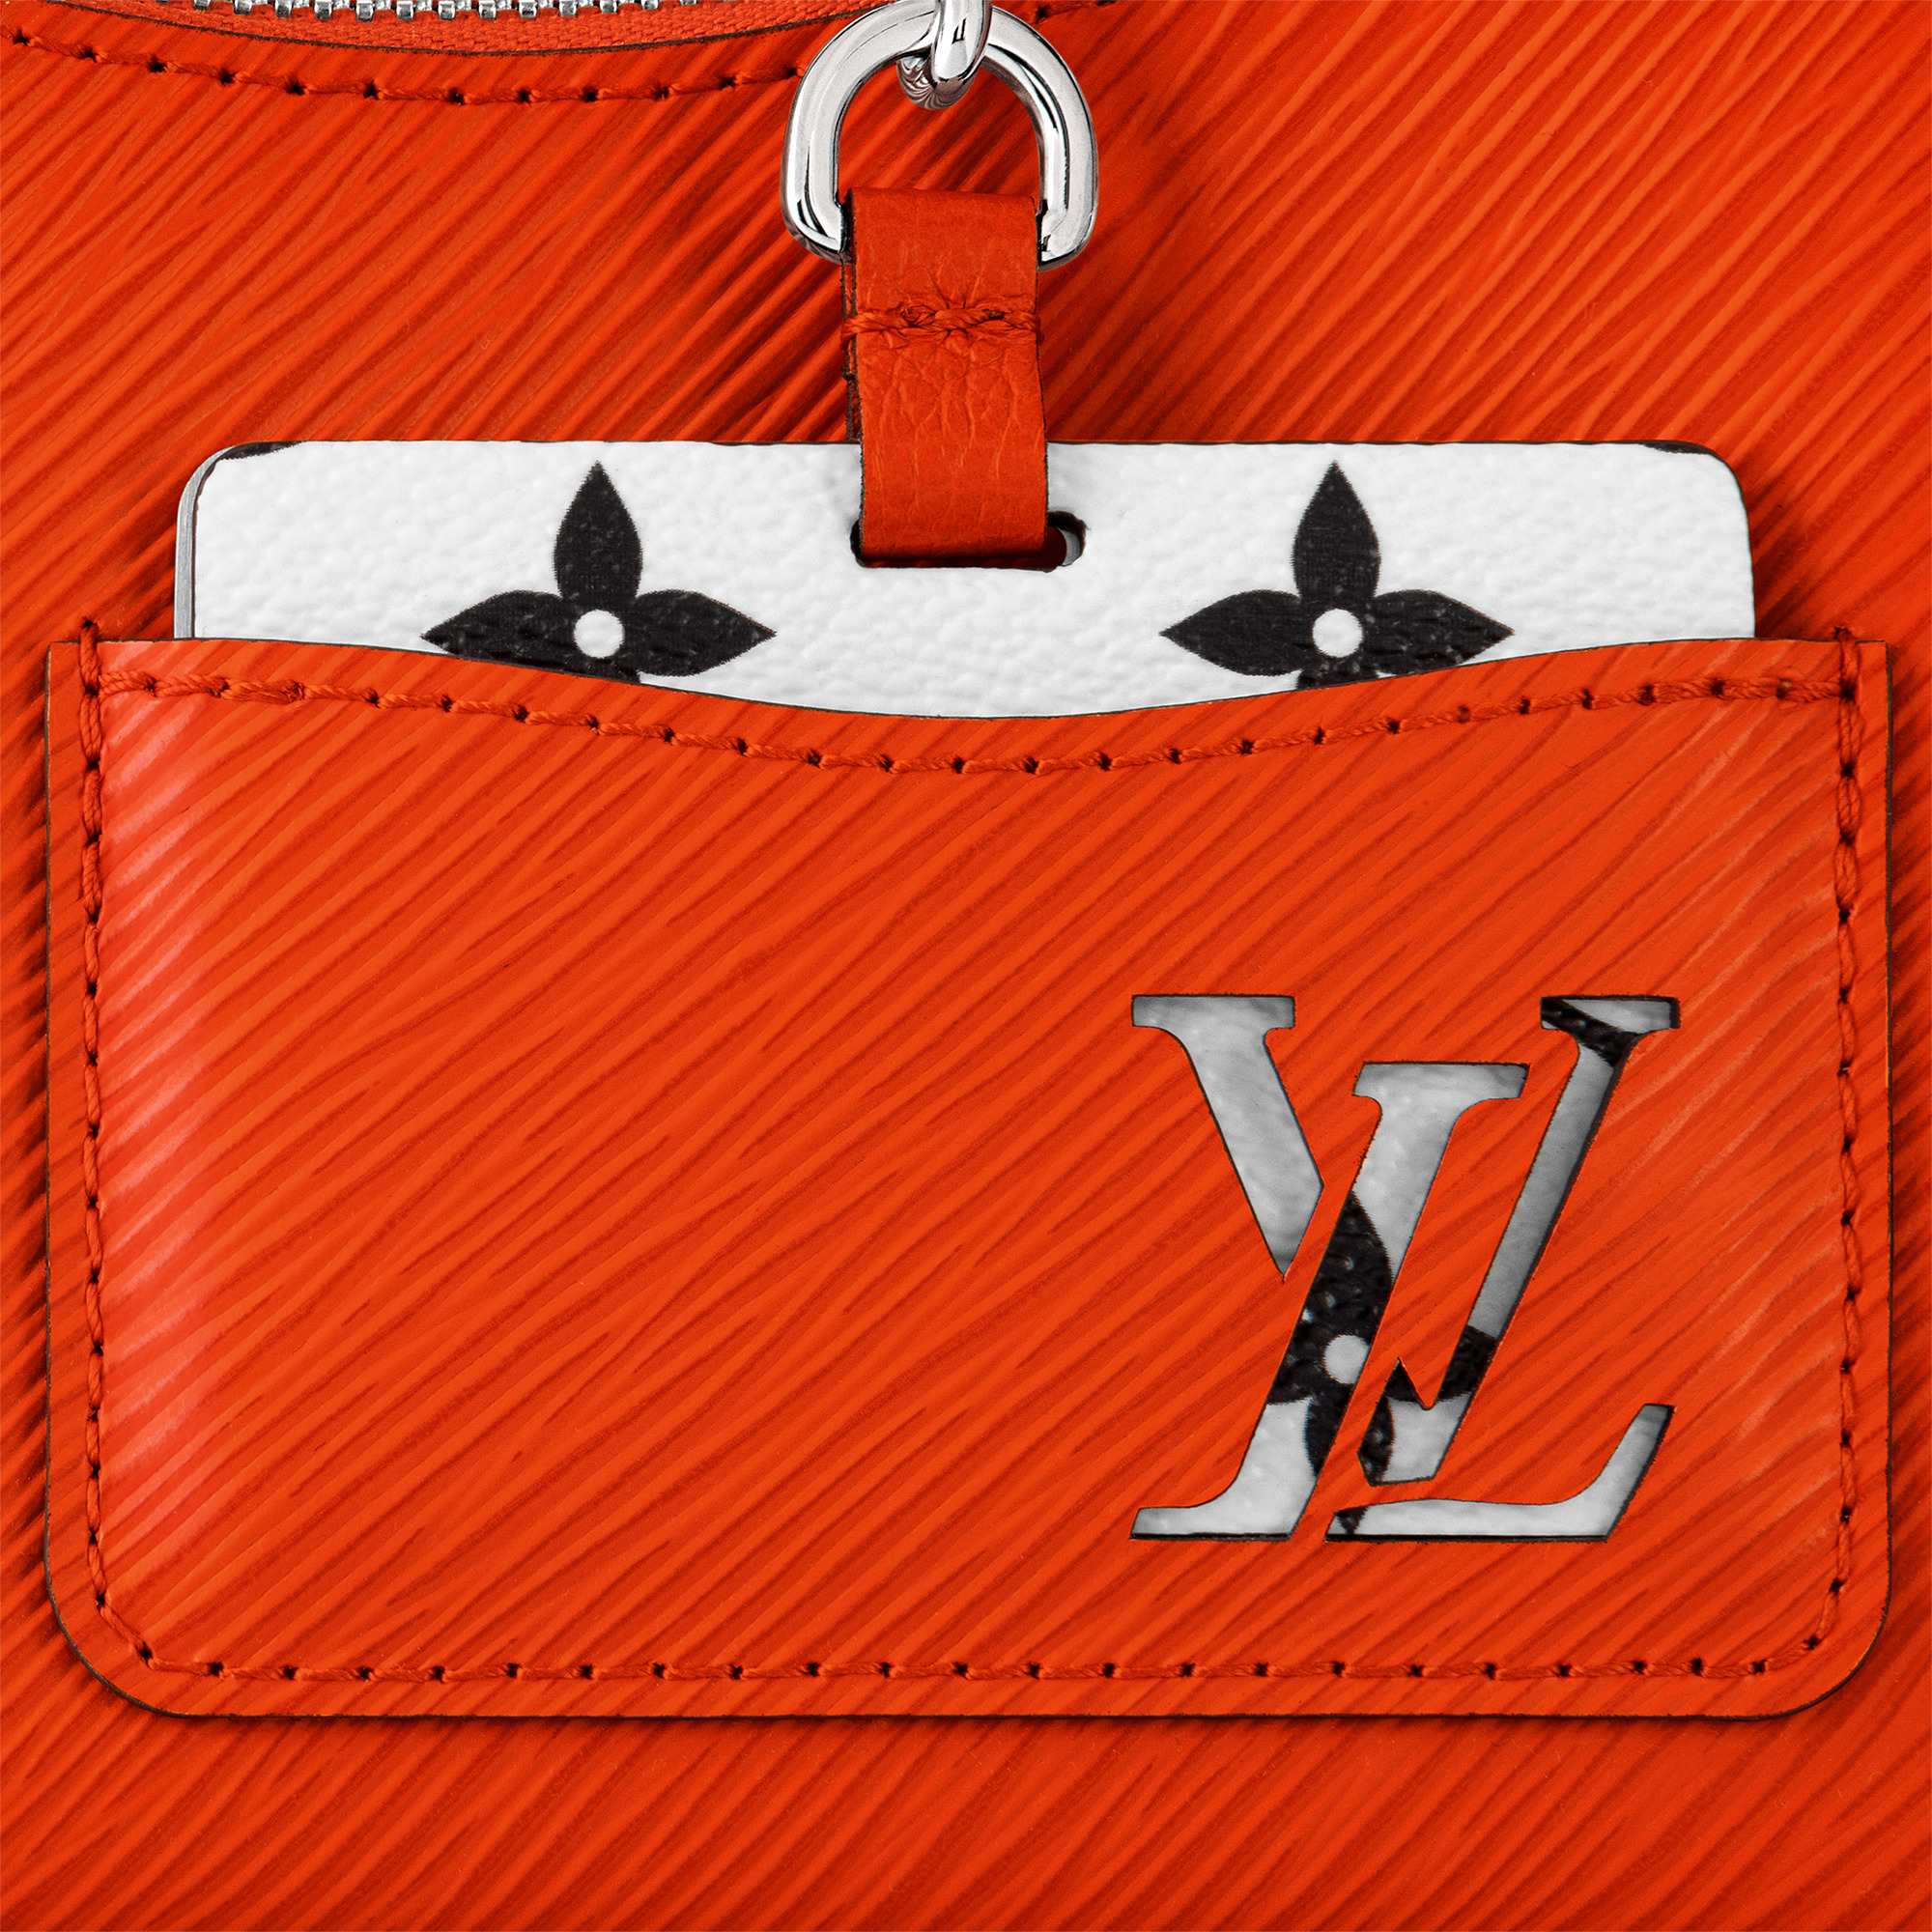 Marellini Epi Leather - Handbags